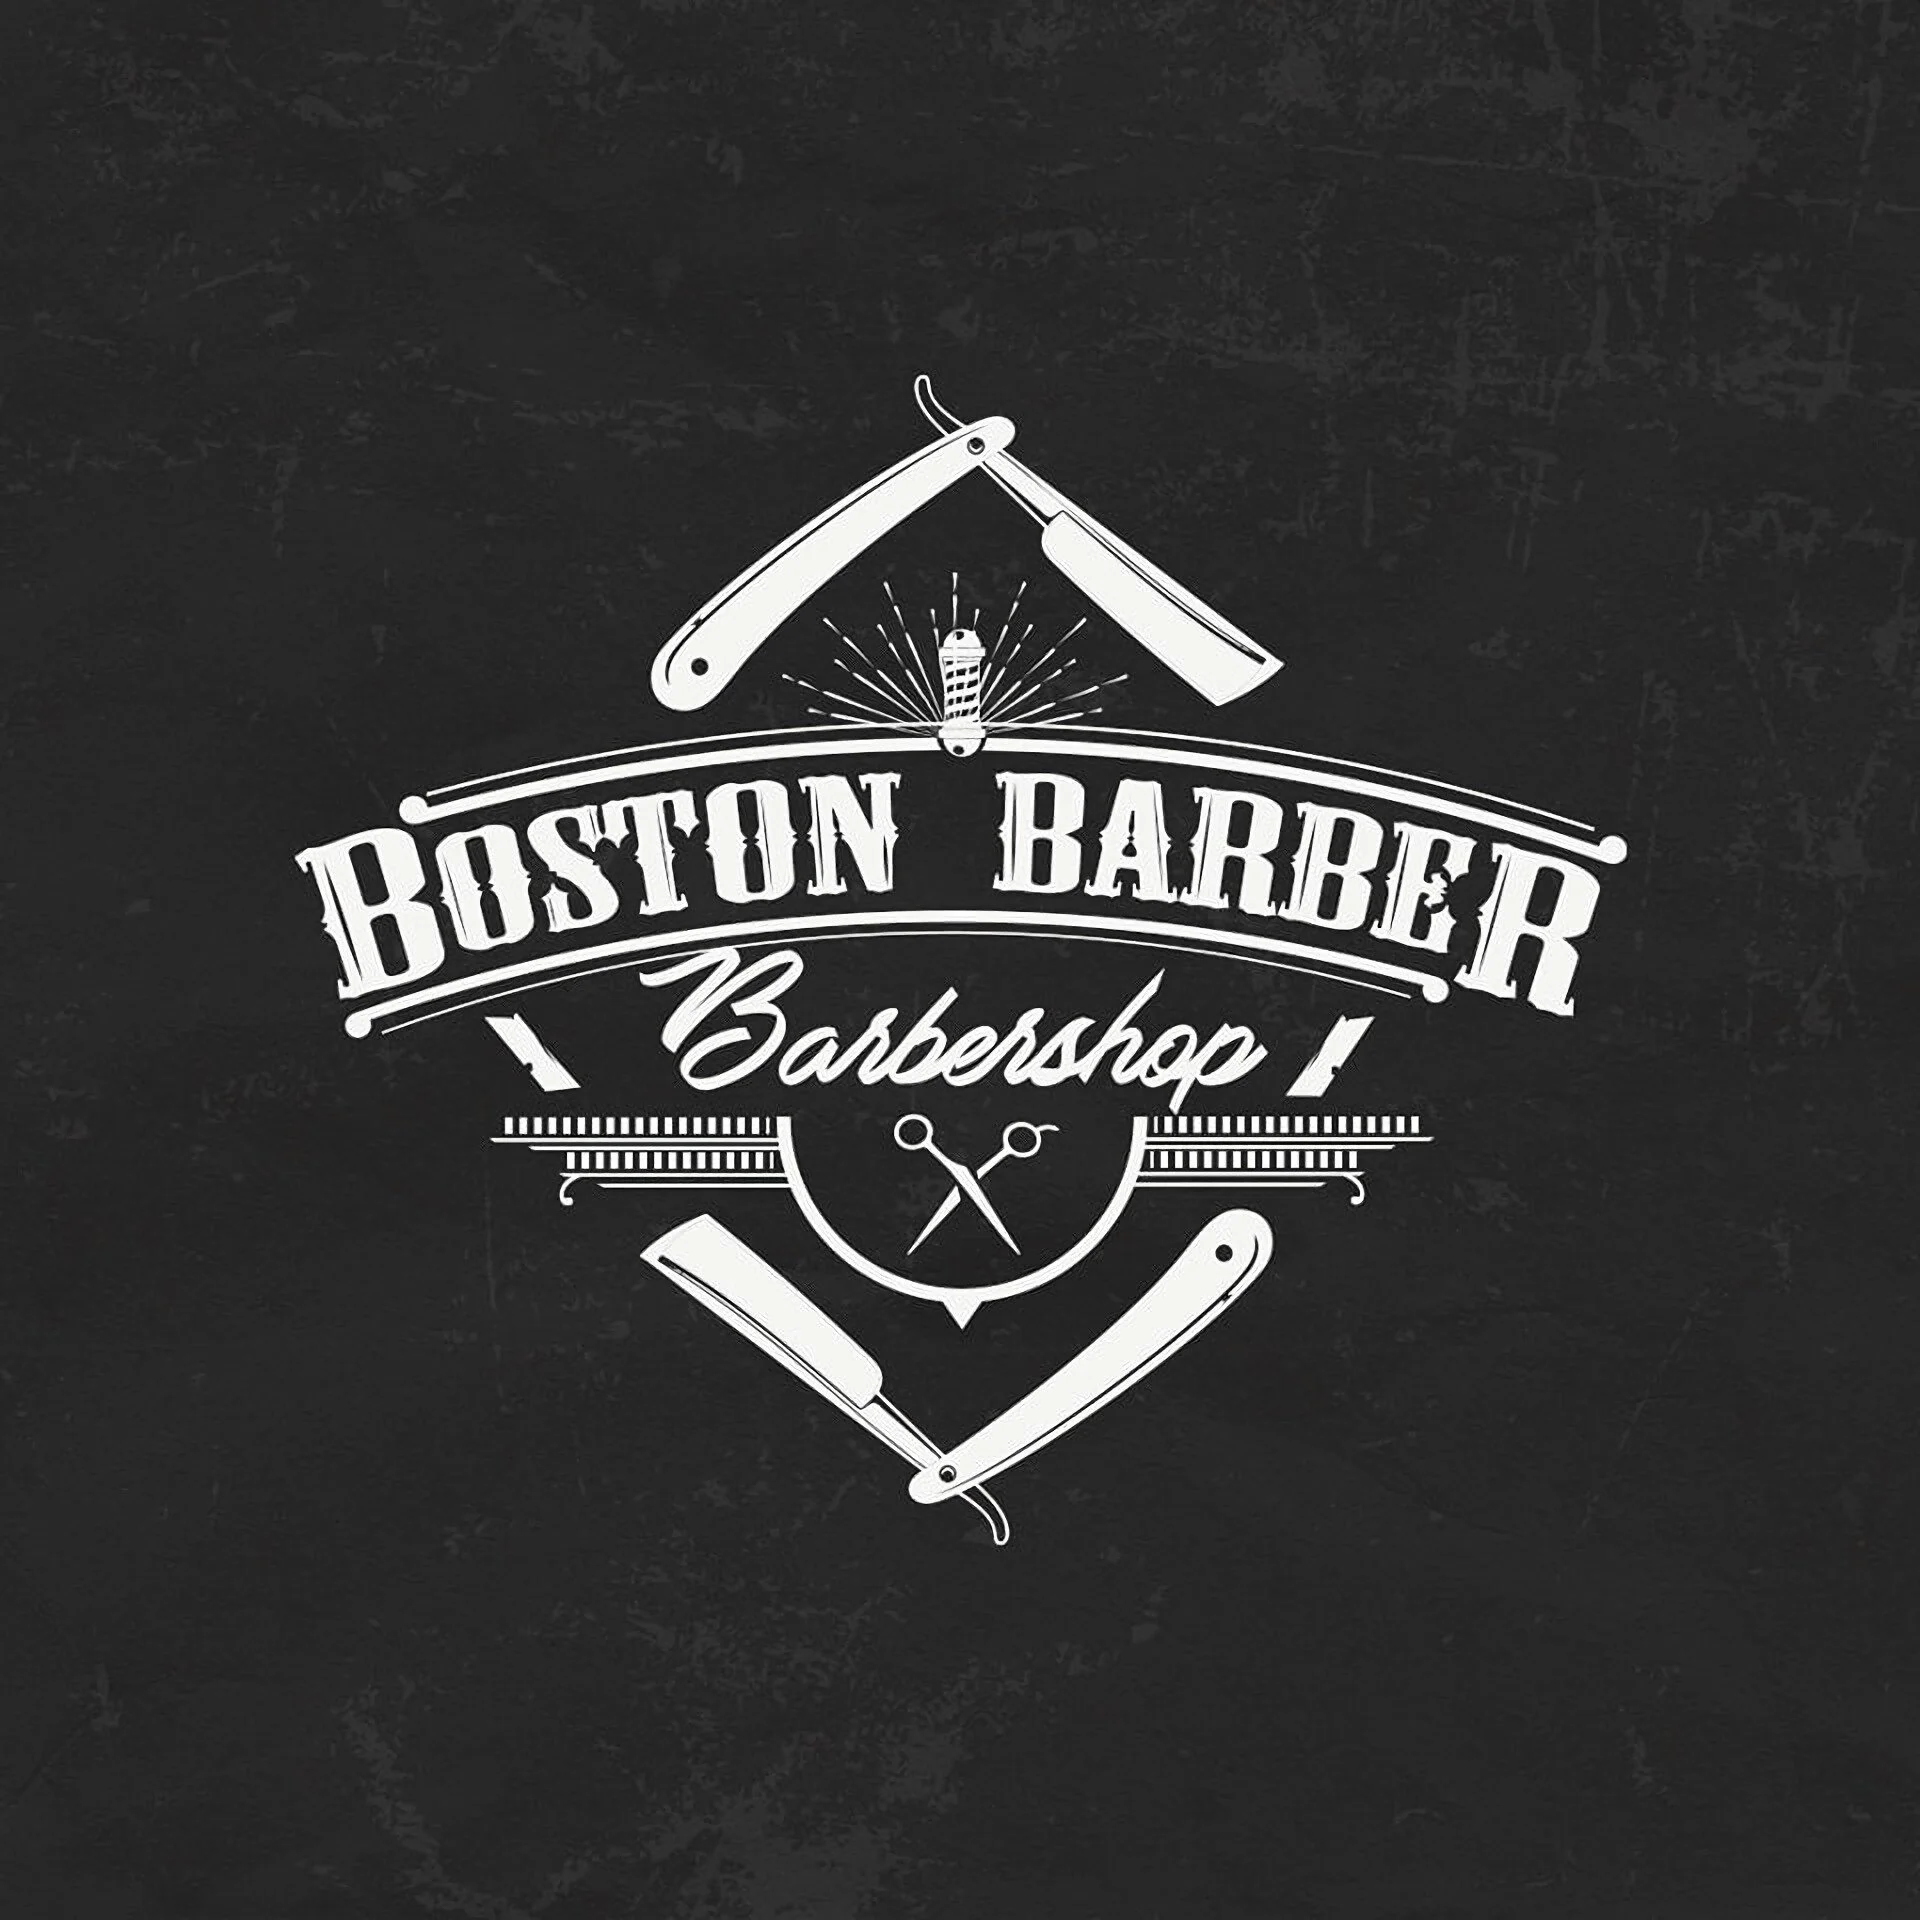 Boston BarberShop-2151